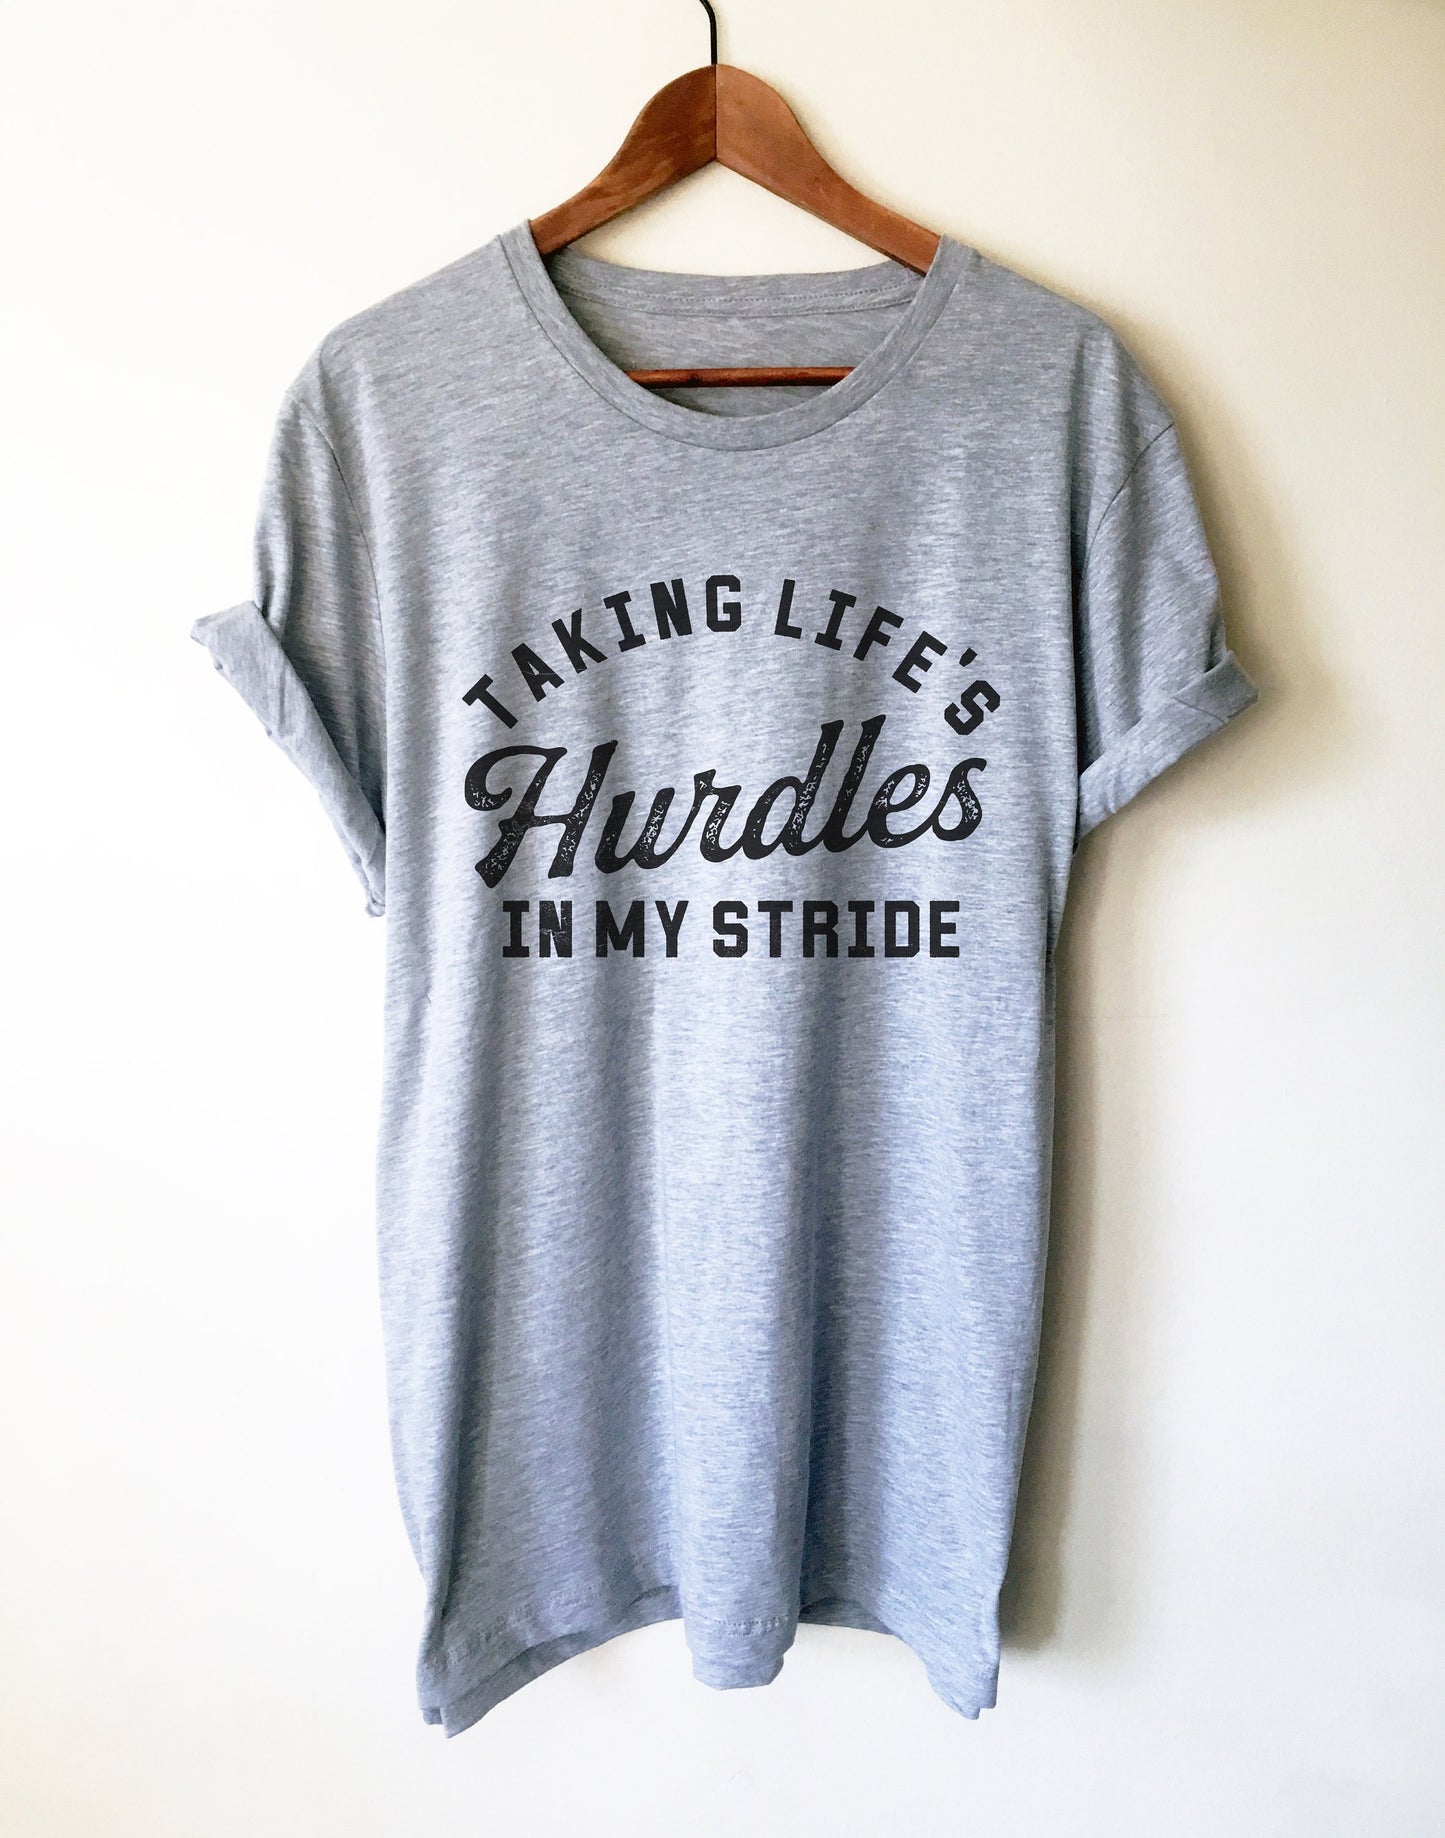 Taking Life’s Hurdles In My Stride Unisex Shirt - Hurdles Shirt, Hurdles Gift, Track Shirt, Track Gift, Track Mom Shirt, Track and Field